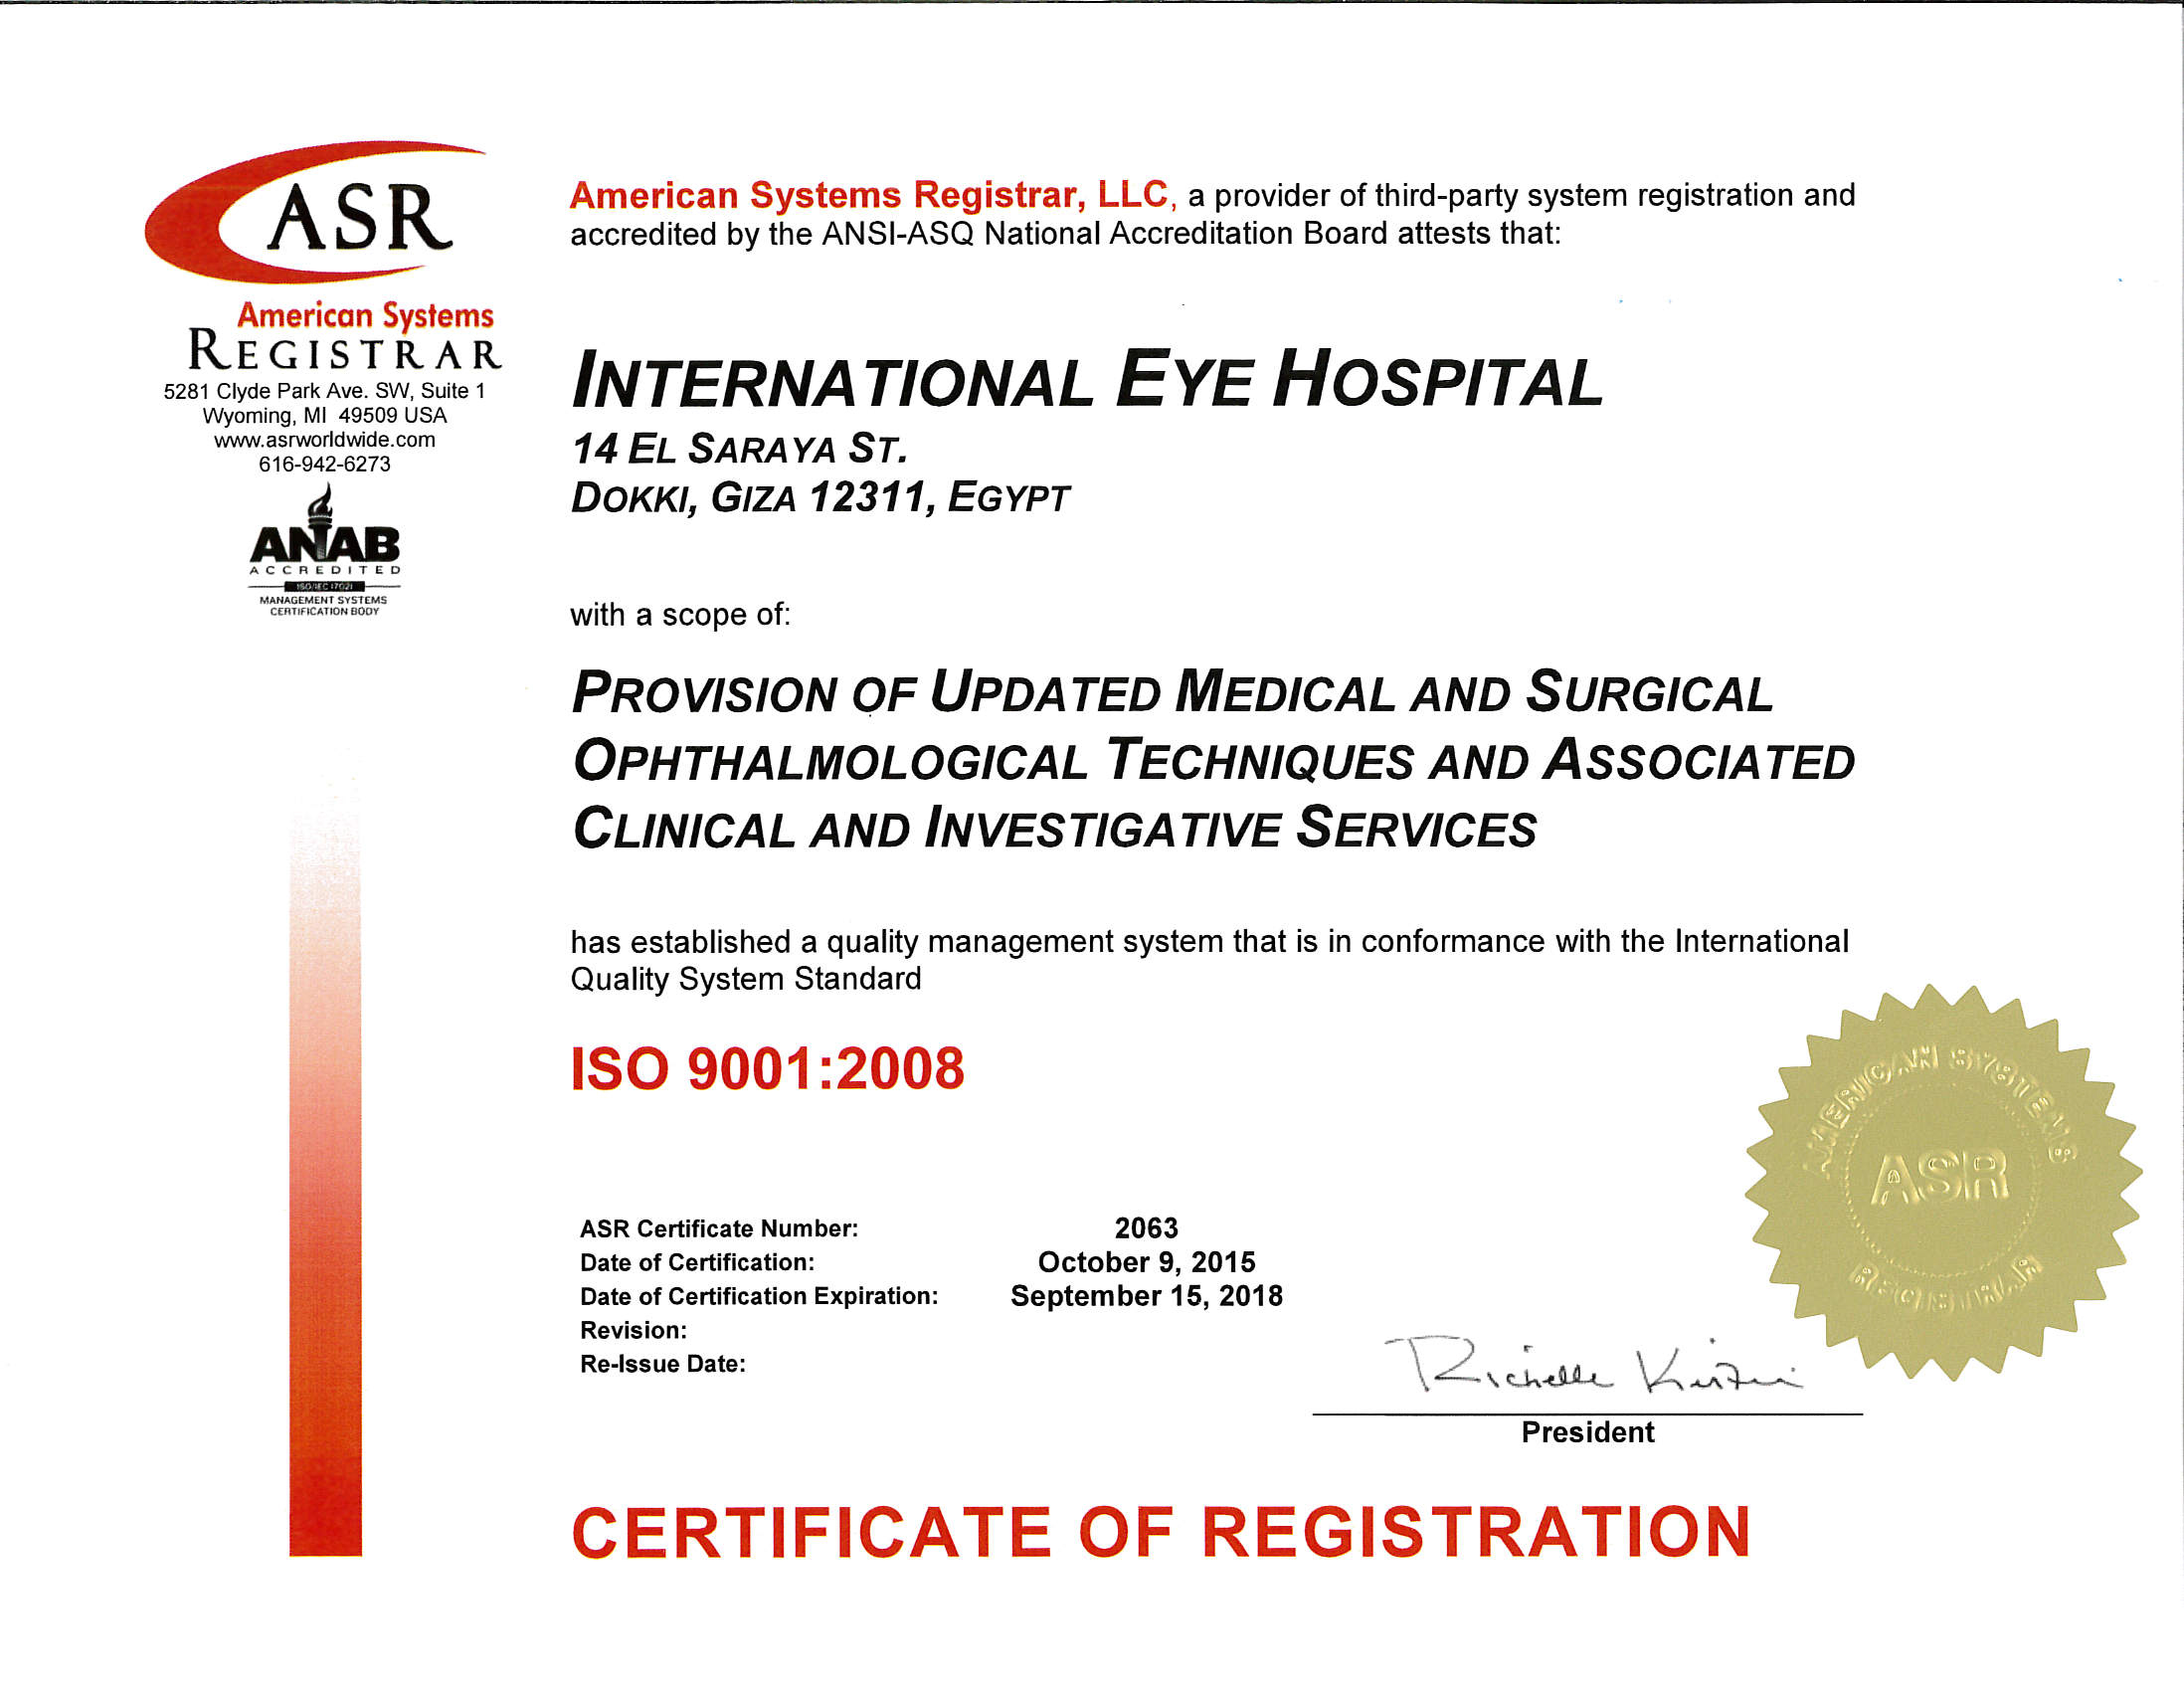 //iehegypt.com/ieh2/wp-content/uploads/2018/05/2063-International-Eye-Hospital-ISO-9001-Certificate-Oct-2015-signed-stamped.jpg